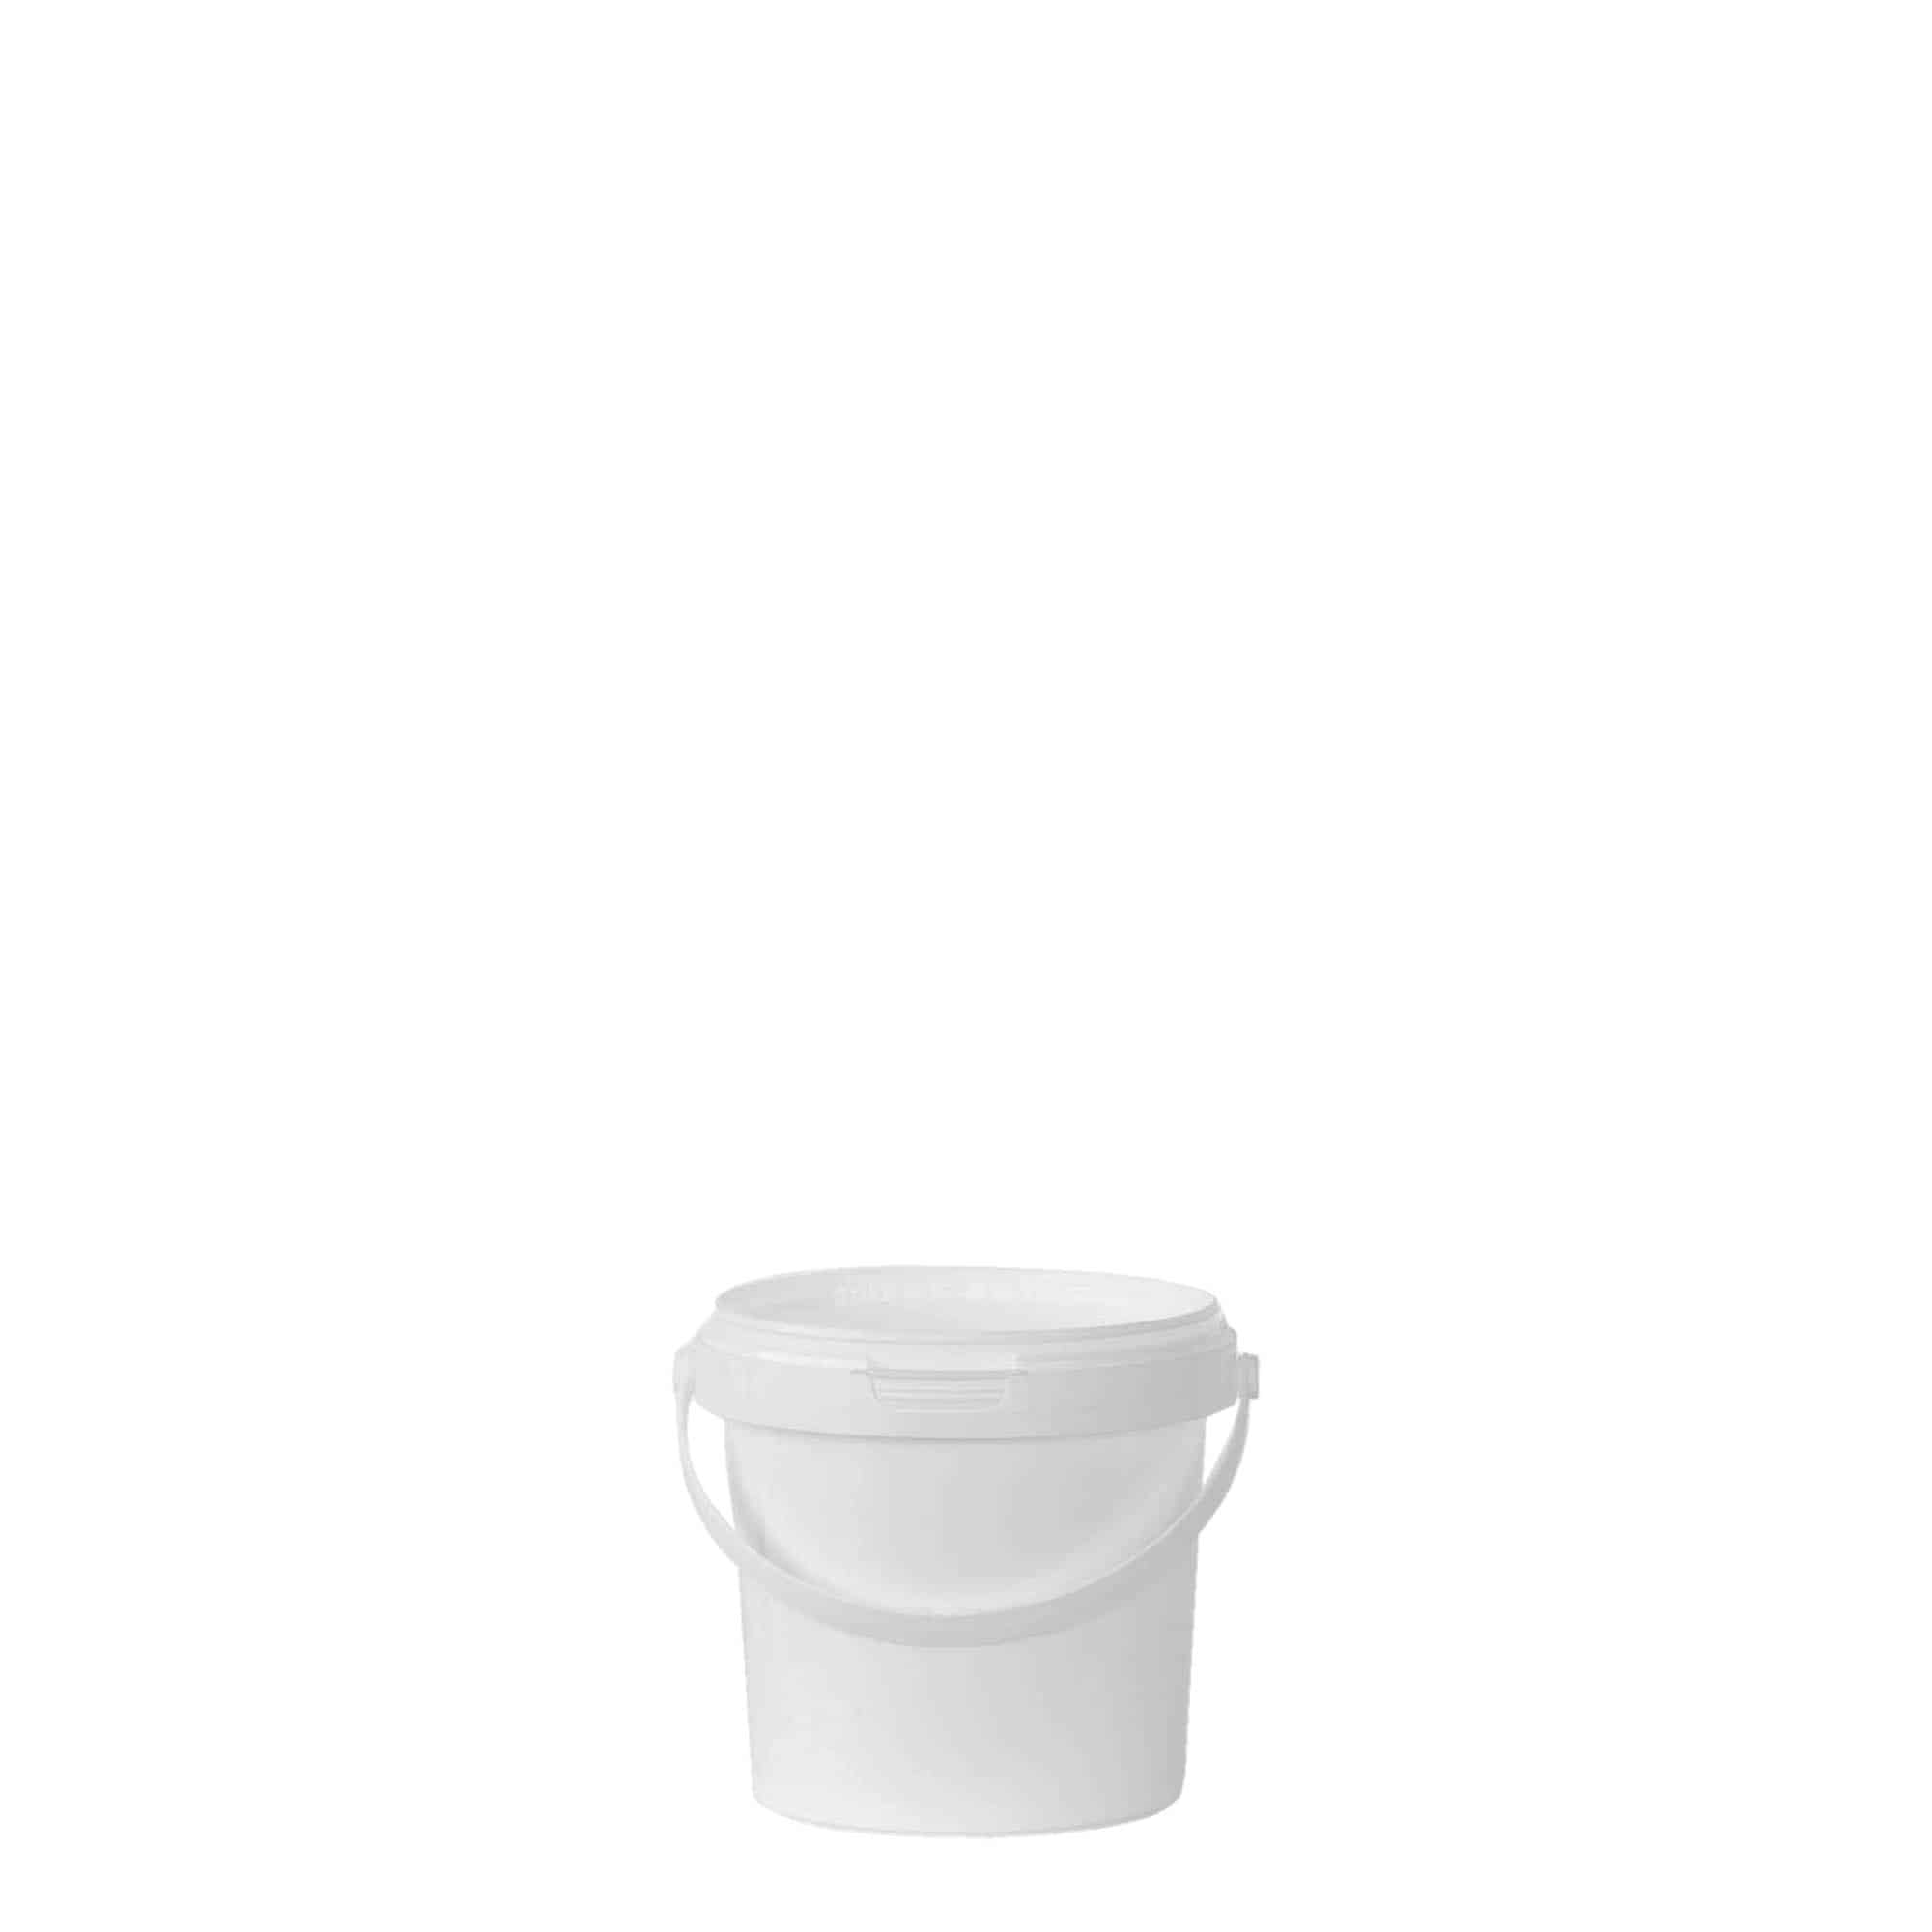 0.6 l bucket, PP plastic, white